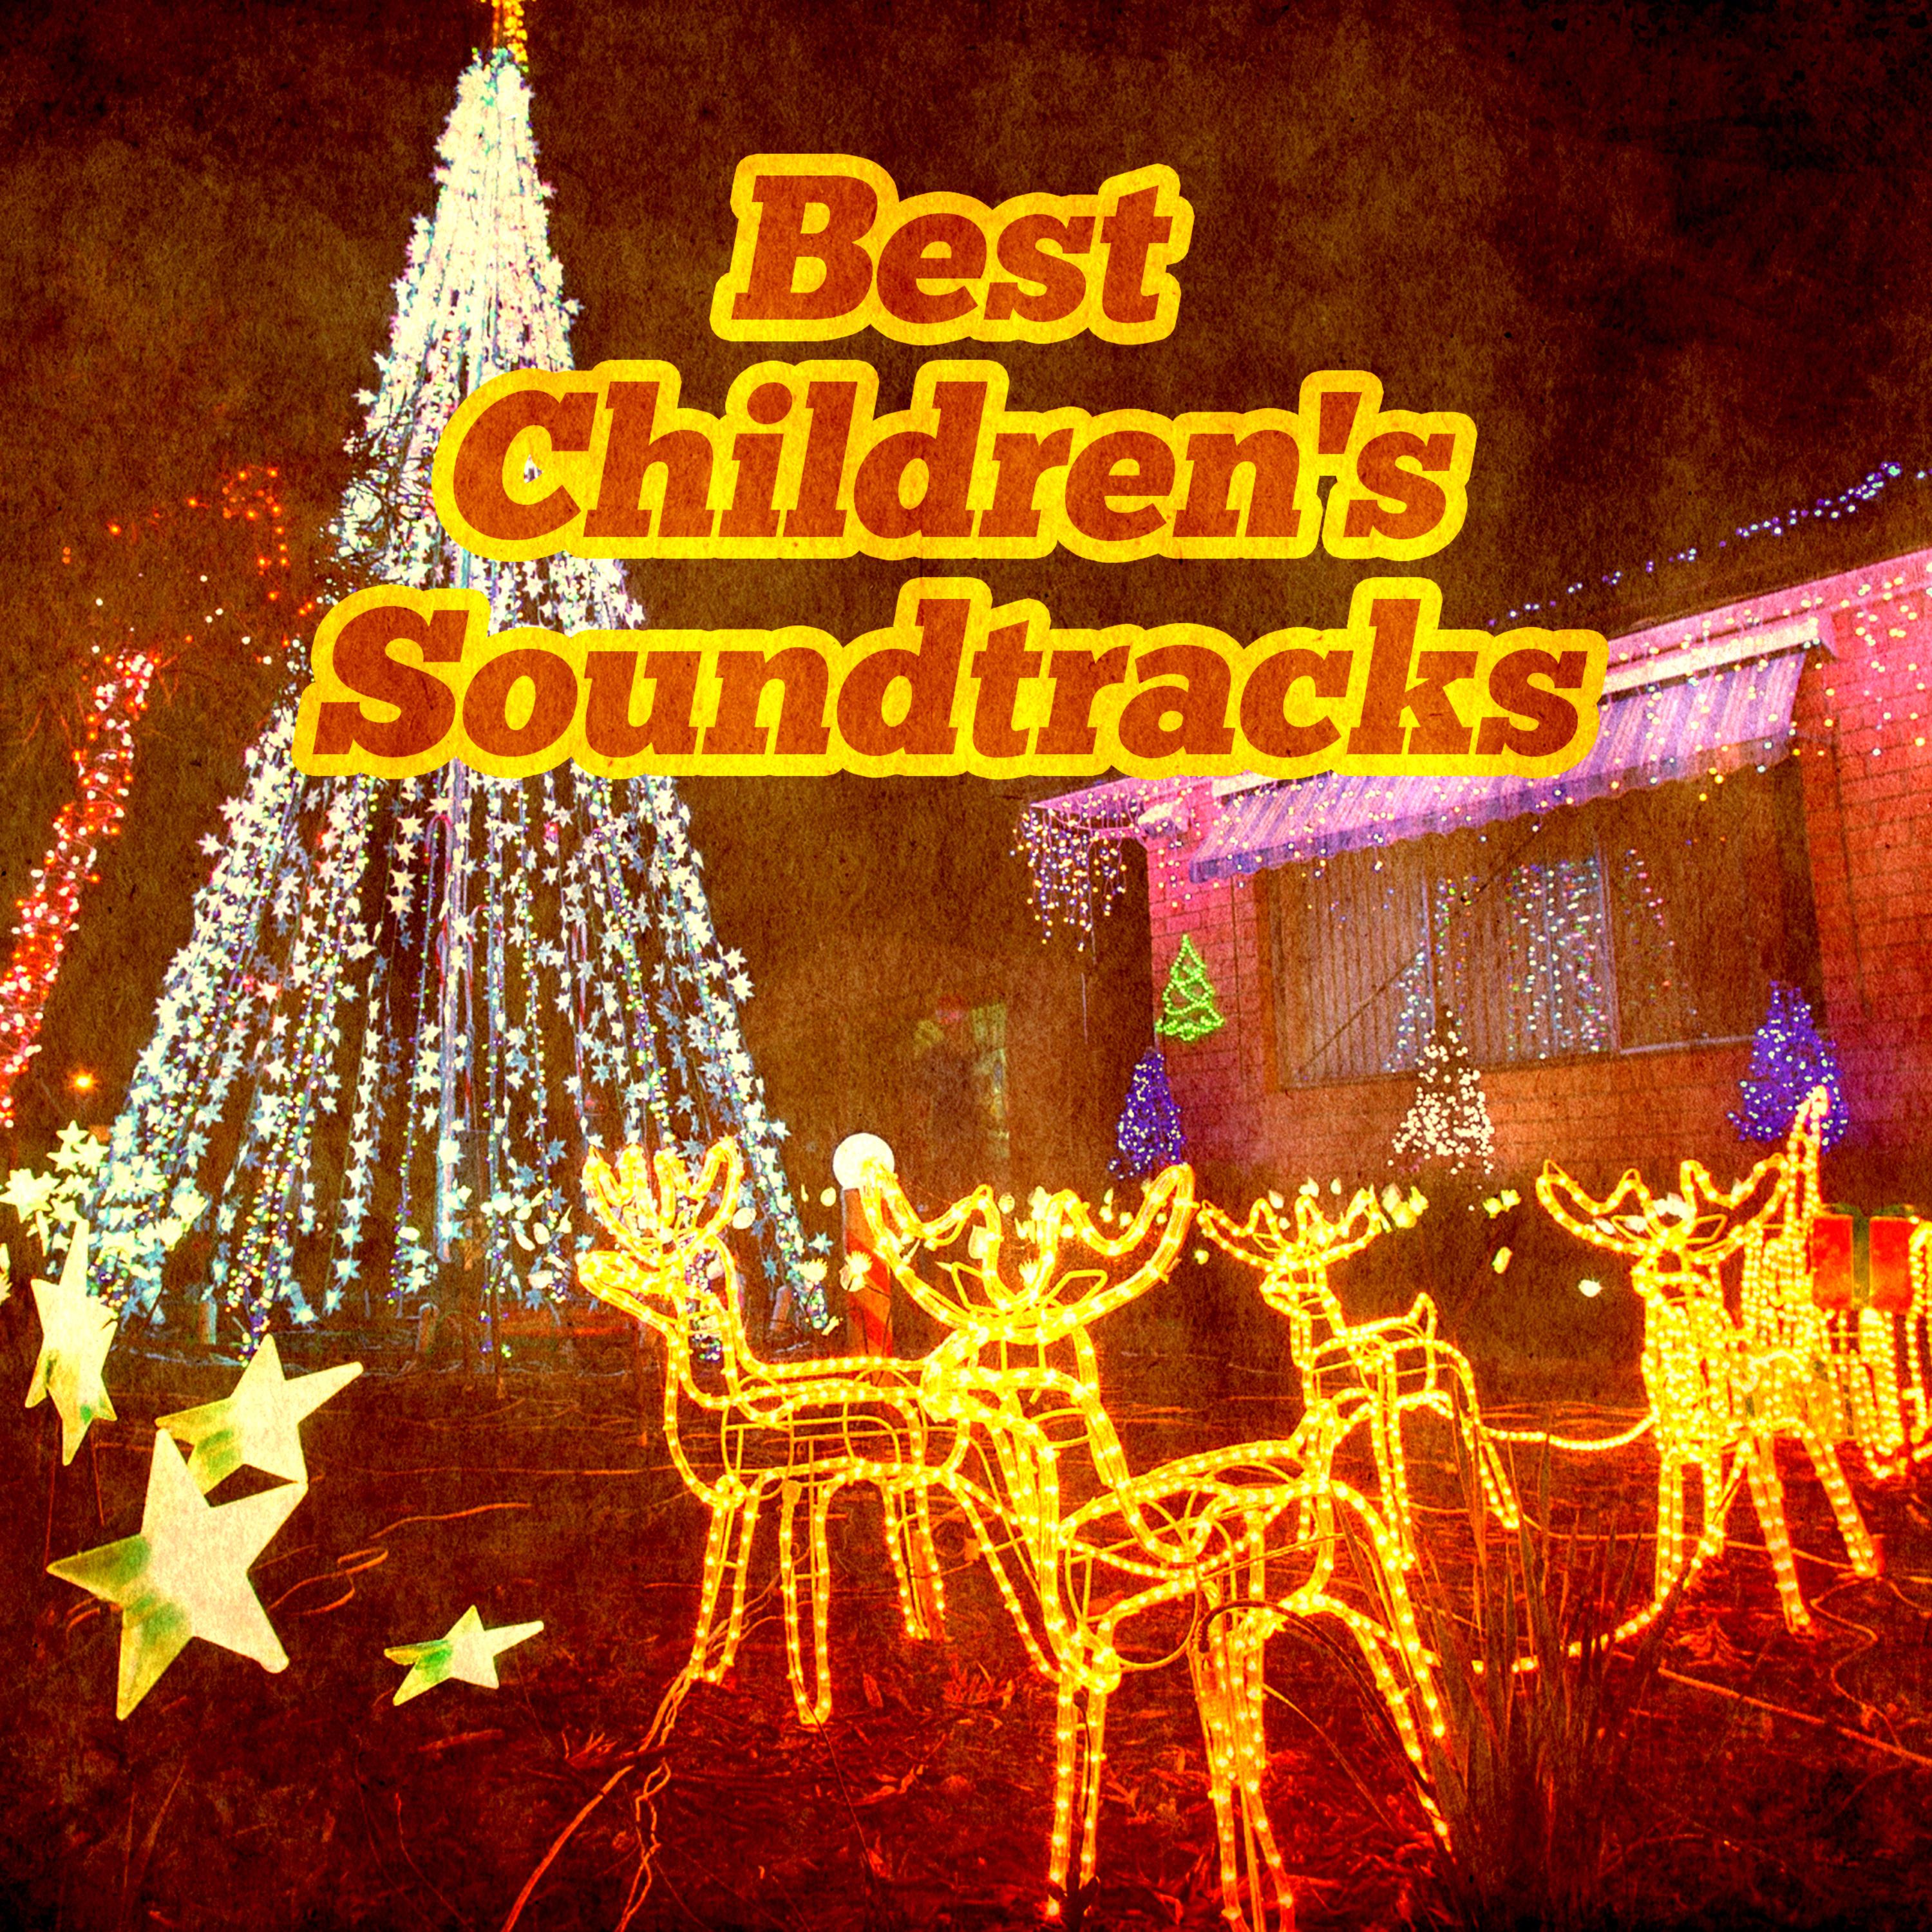 Best Childrens' Soundtracks